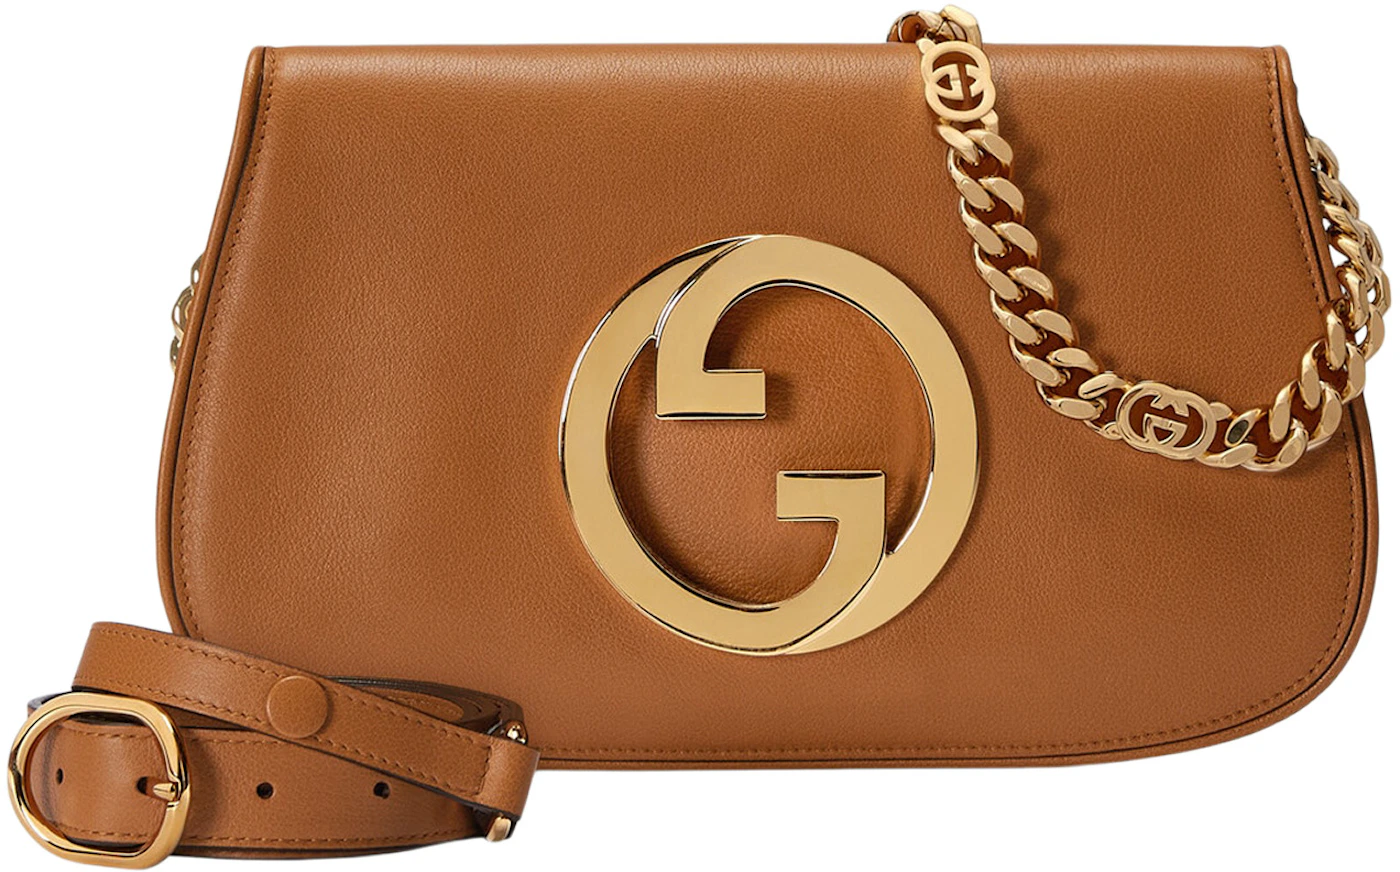 Gucci Blondie small shoulder bag in orange leather